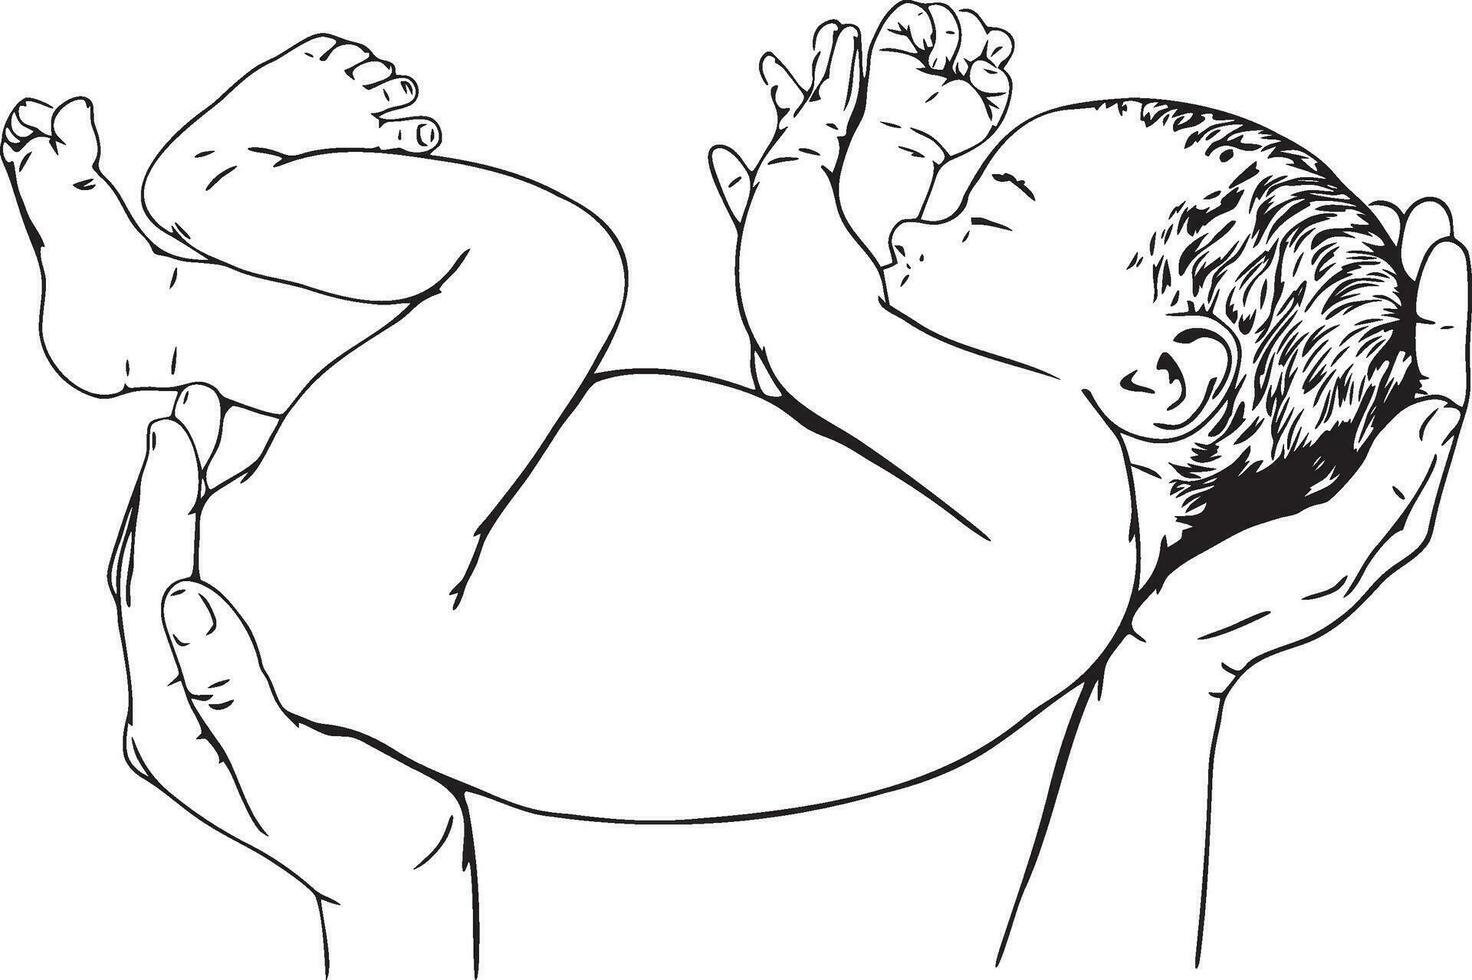 Neugeborene Baby Vektor Illustration